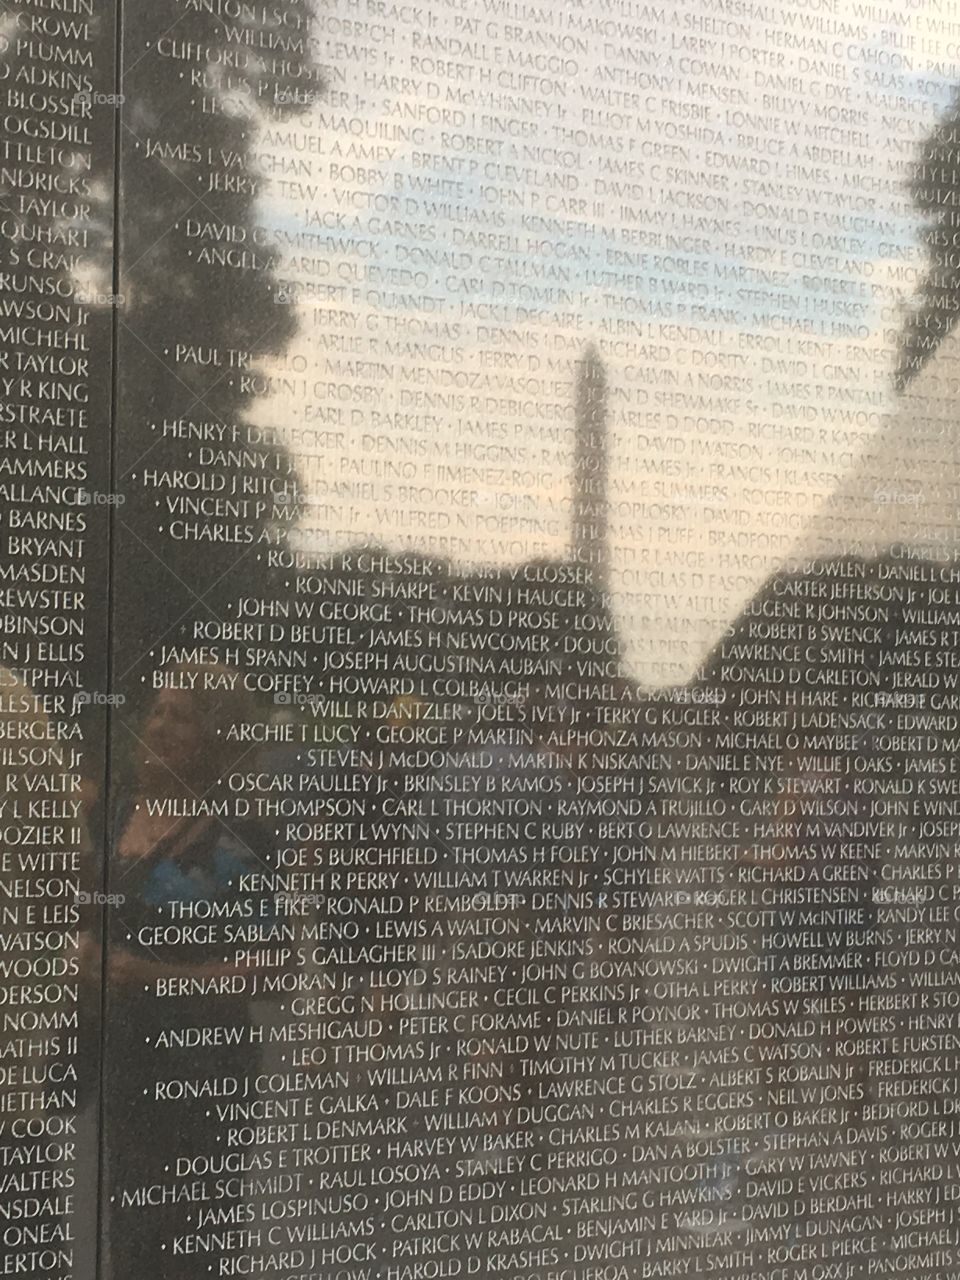 Washington monument reflected in the Vietnam War Veterans Memorial